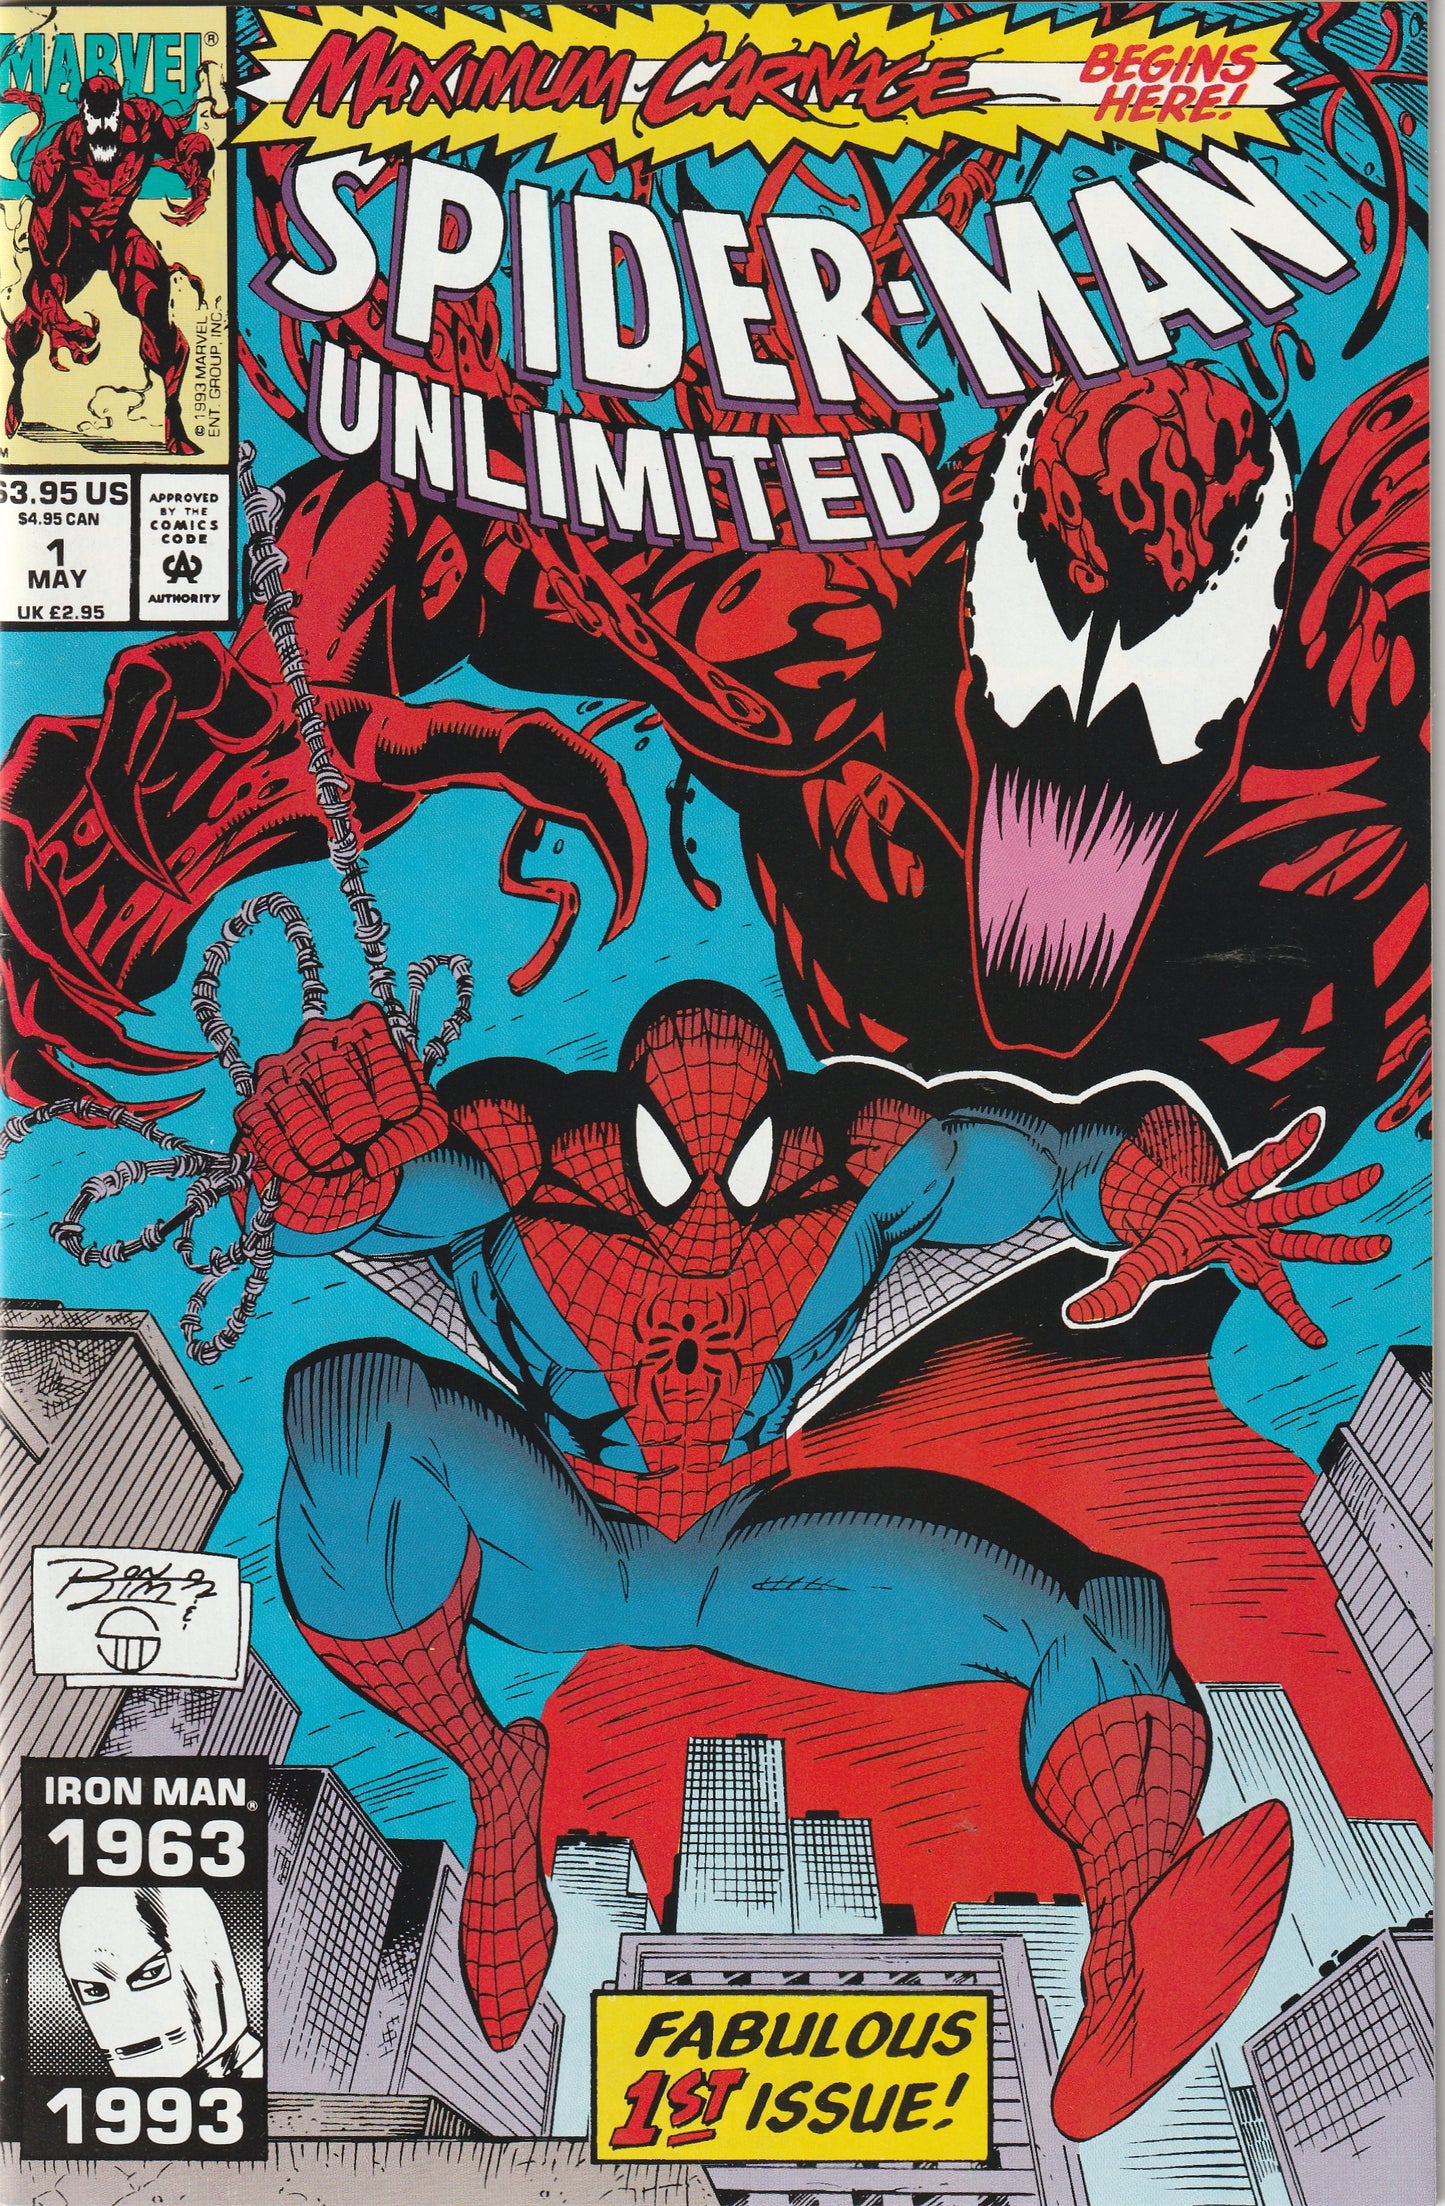 Spider-Man Unlimited #1 (1993) - 1st Appearance of Shriek - Maximum Carnage Part 1